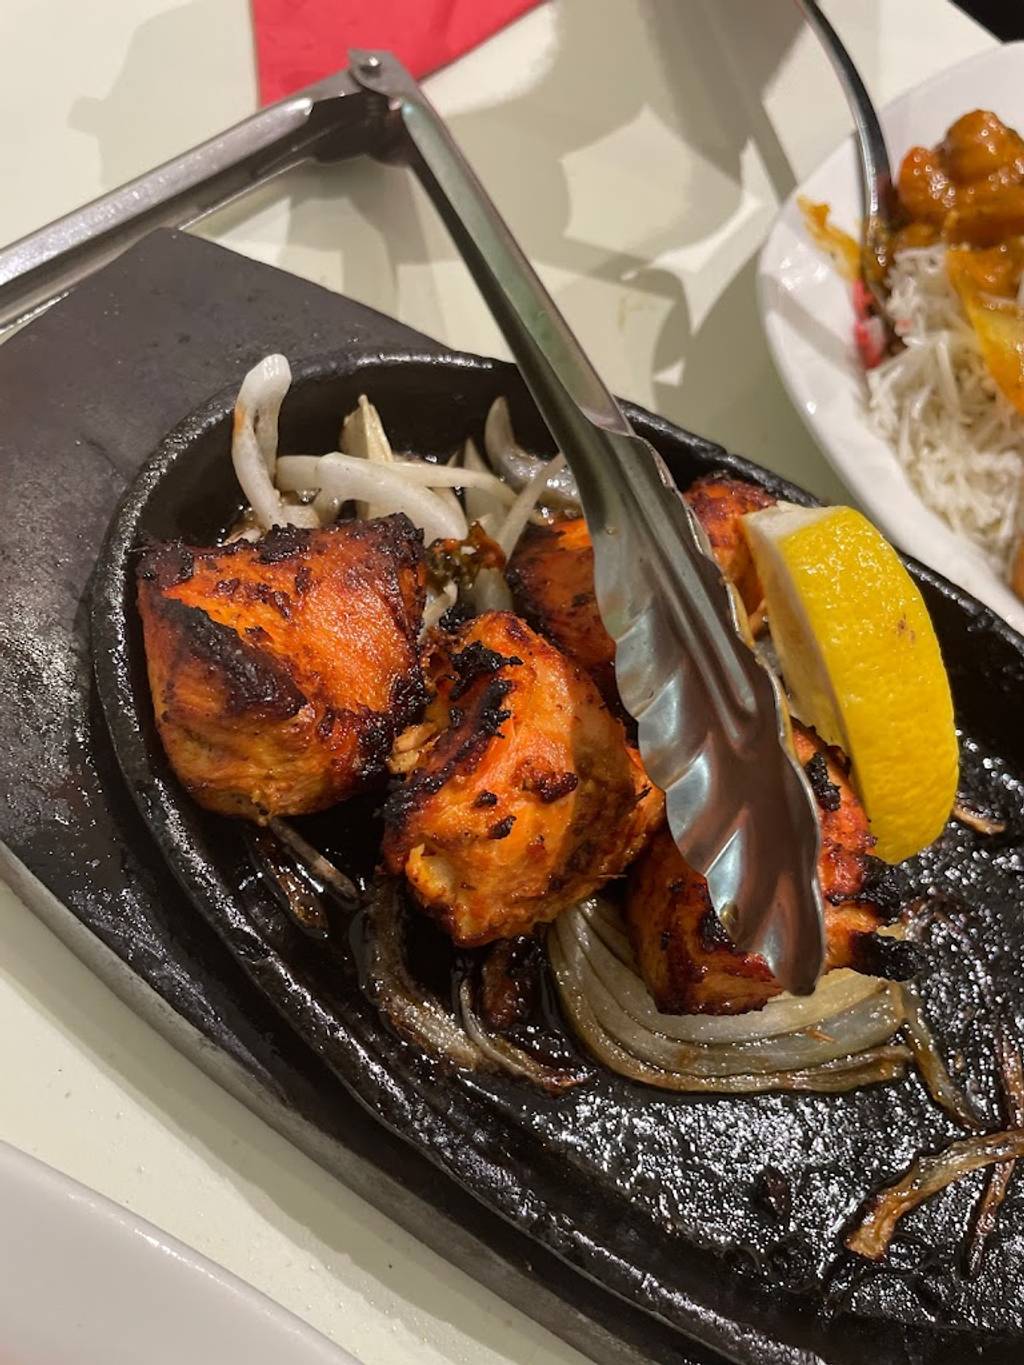 Qila restaurant Indien Sarcelles - Food Ingredient Recipe Tableware Dish